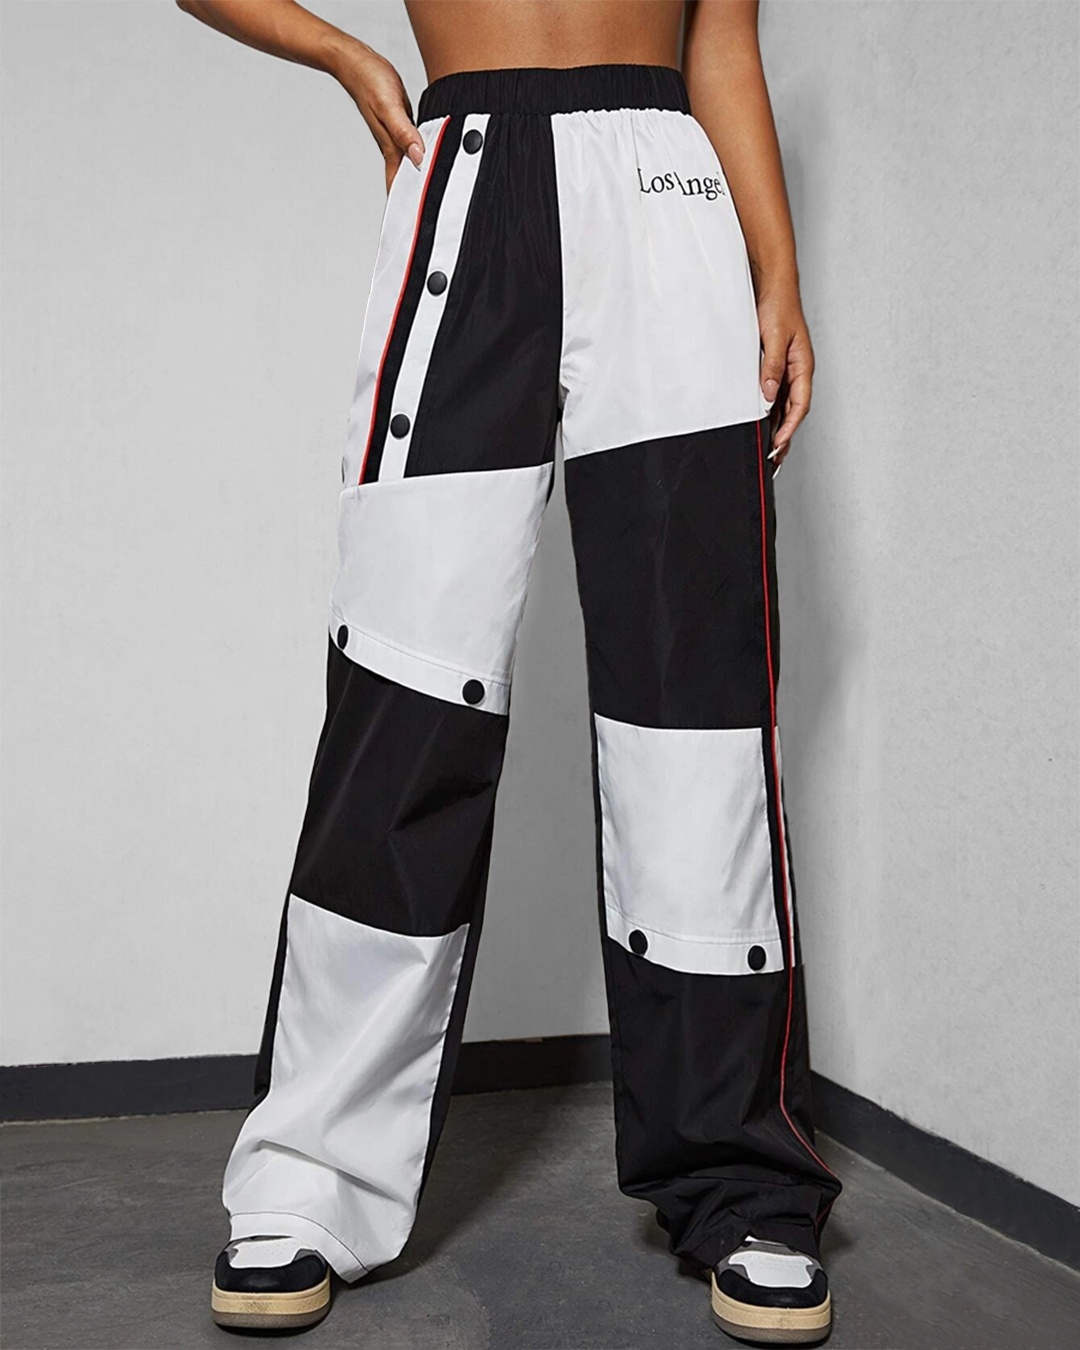 Fashion trends | Black top, white palazzo pants | Style, Fashion, Clothes